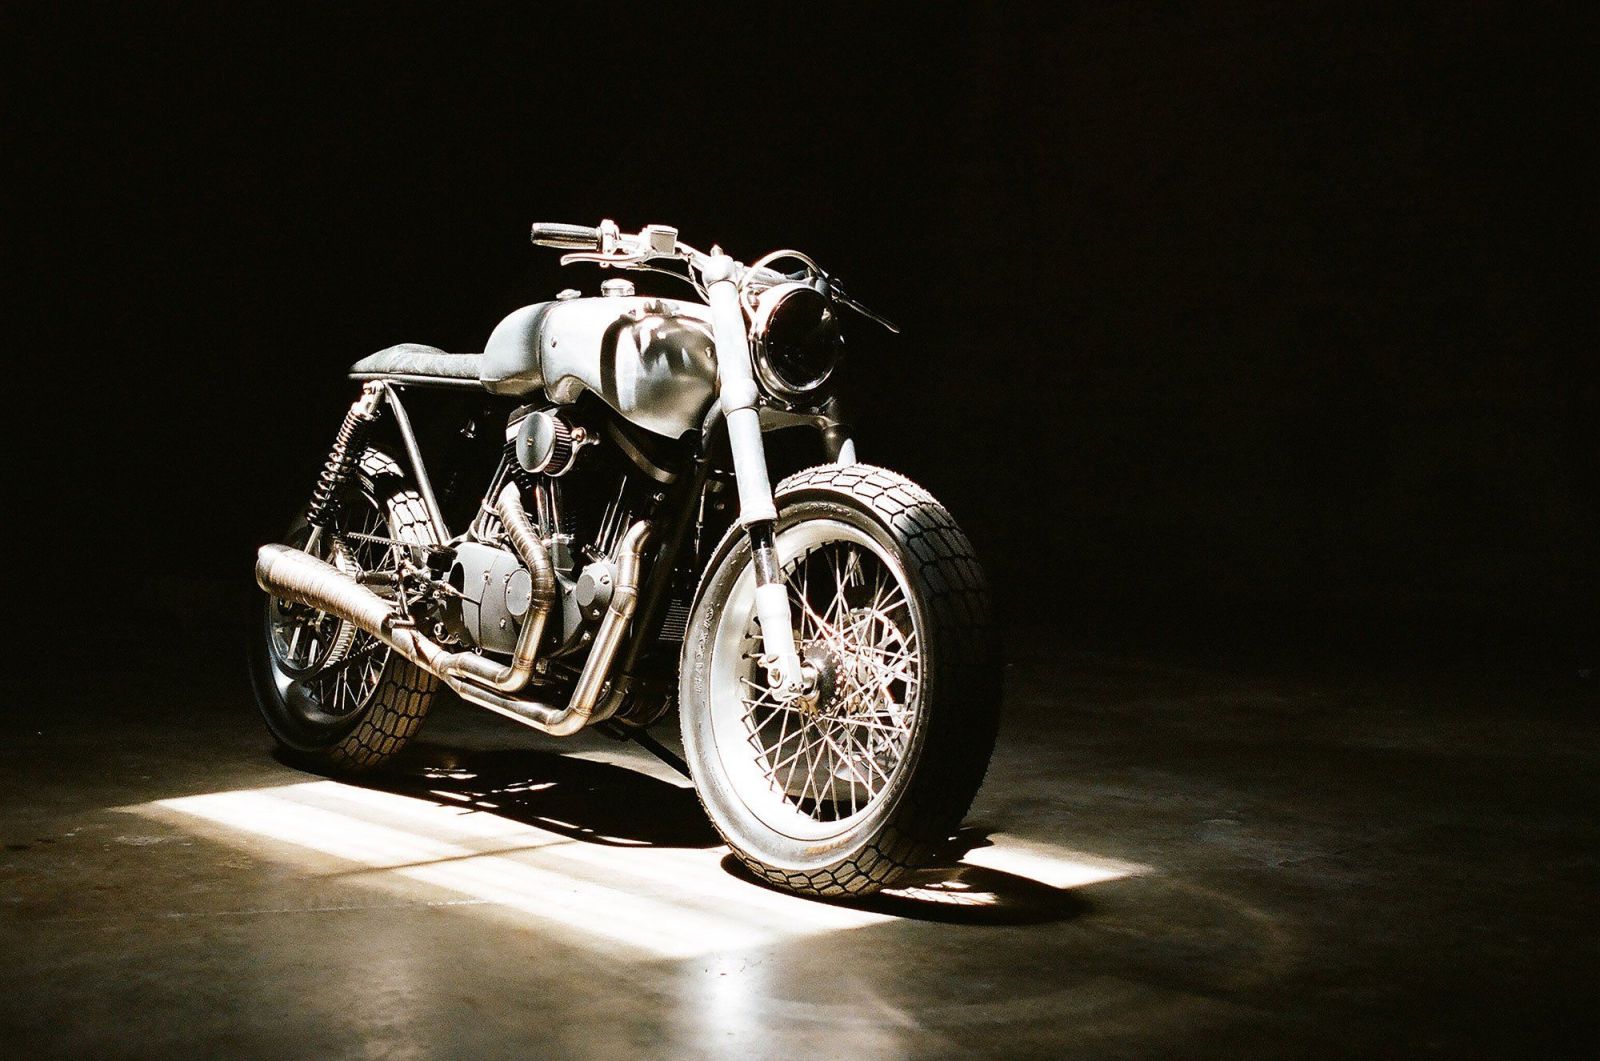 The Hardley custom Harley-Davidson by Revival Cycles